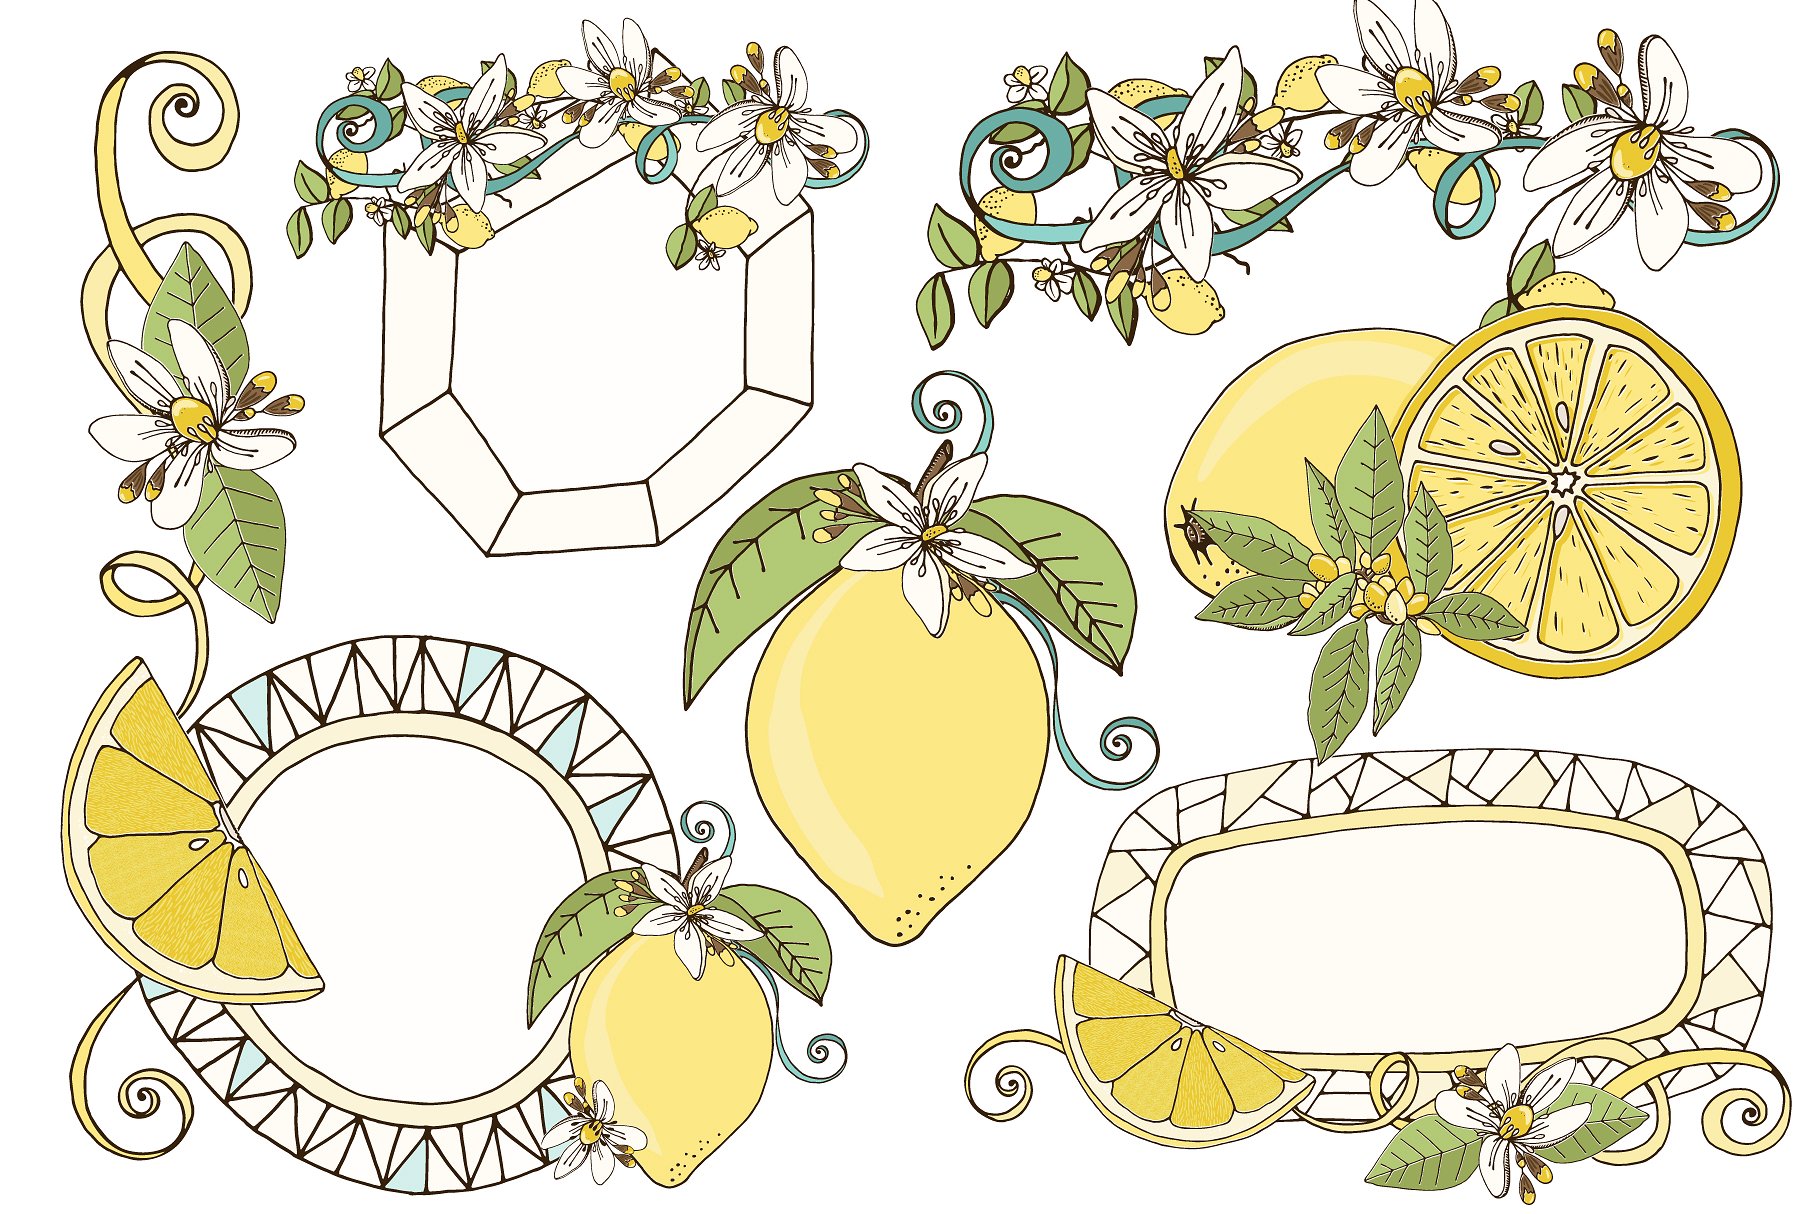 新鲜夏天柠檬插图合集 Lemons, Summer Fruit Illustrations插图(2)